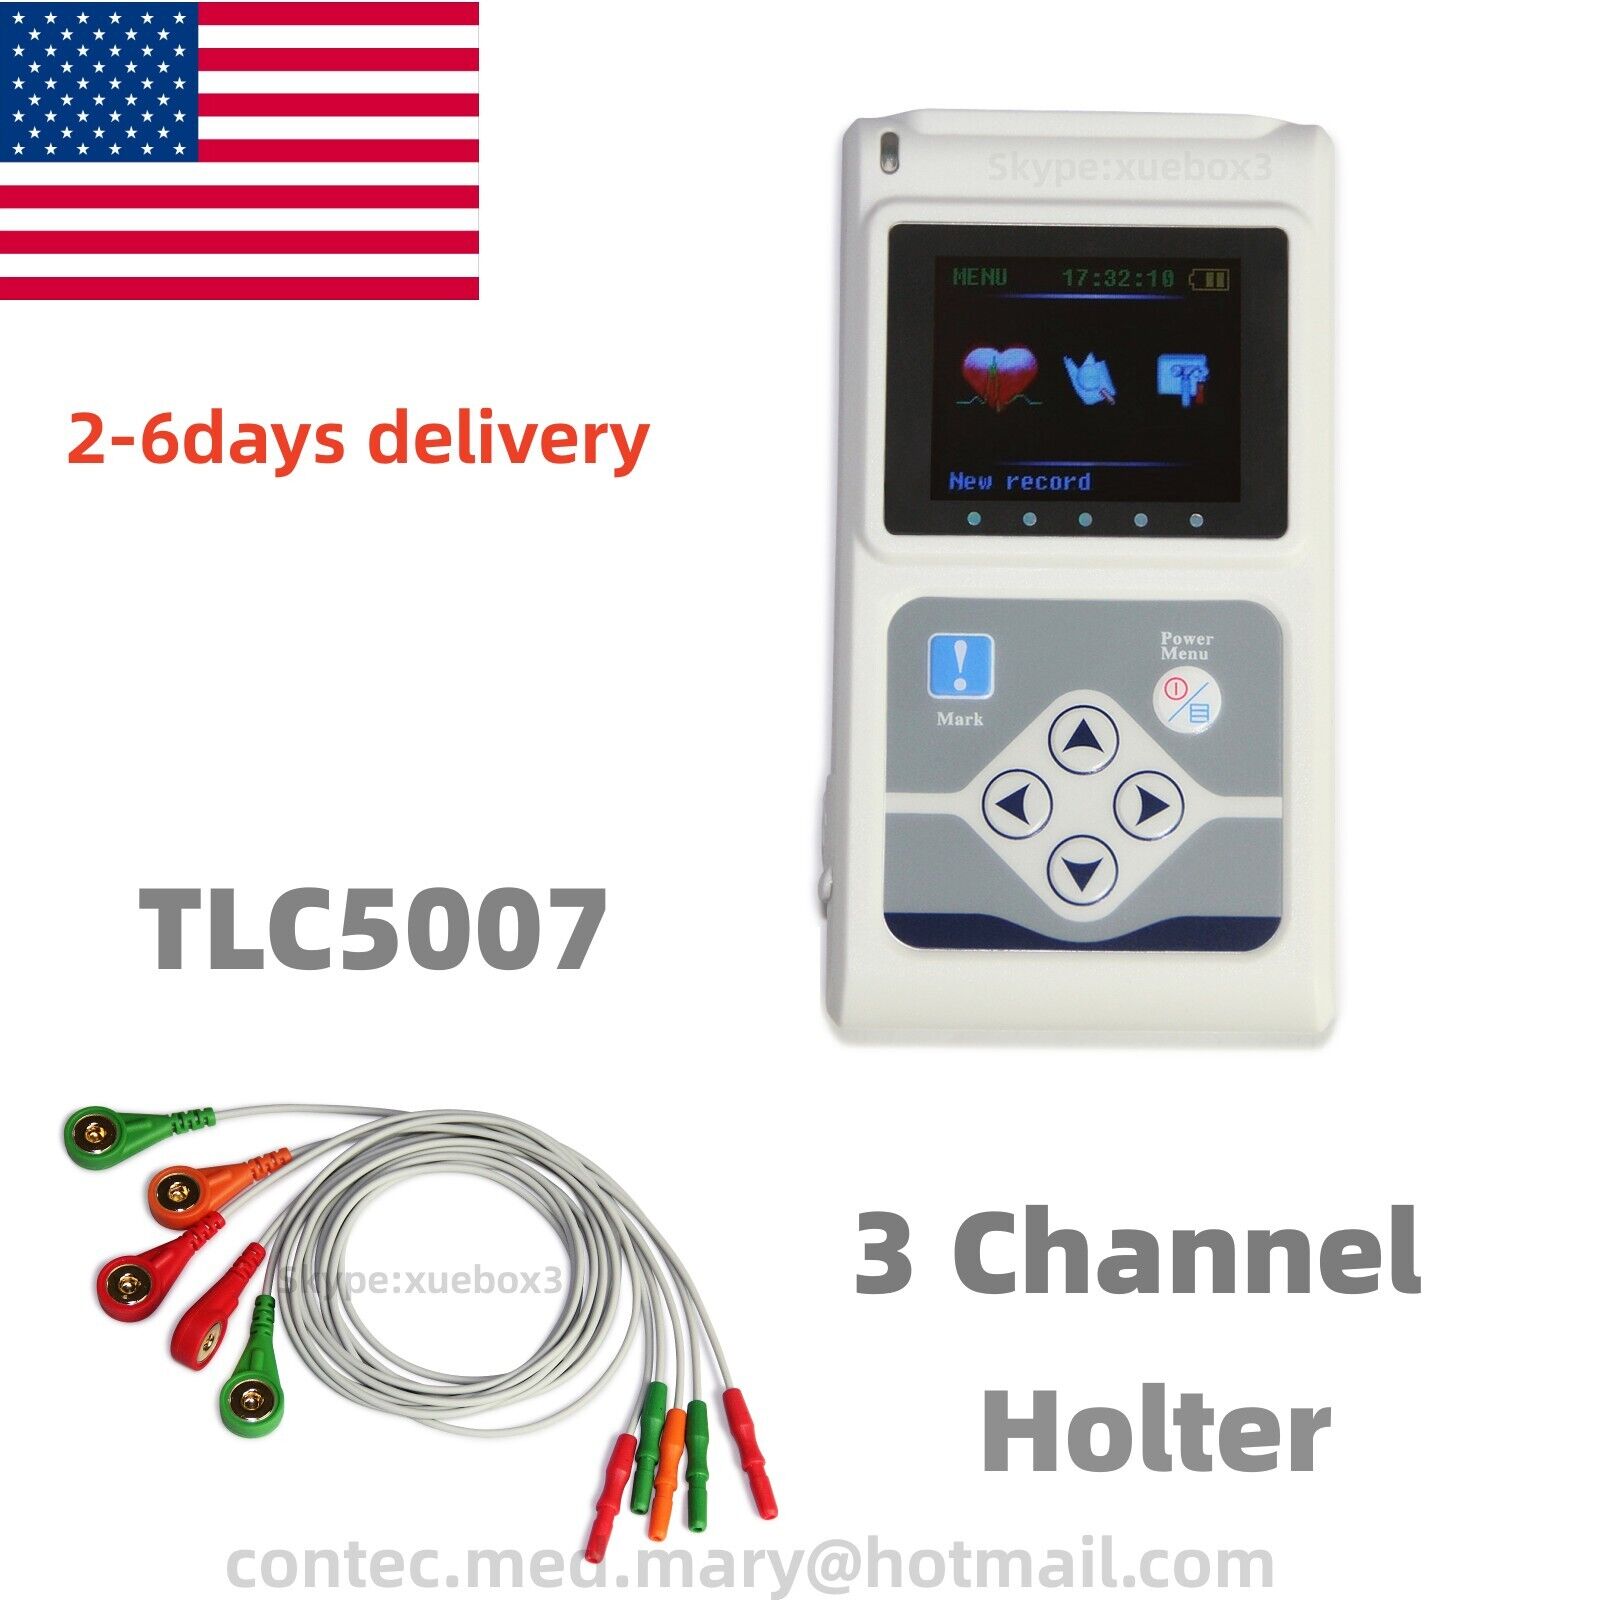 24hrs 3-Lead color EKG Holter ECG Recorder Monitor Software Analyzer TLC5007 FDA